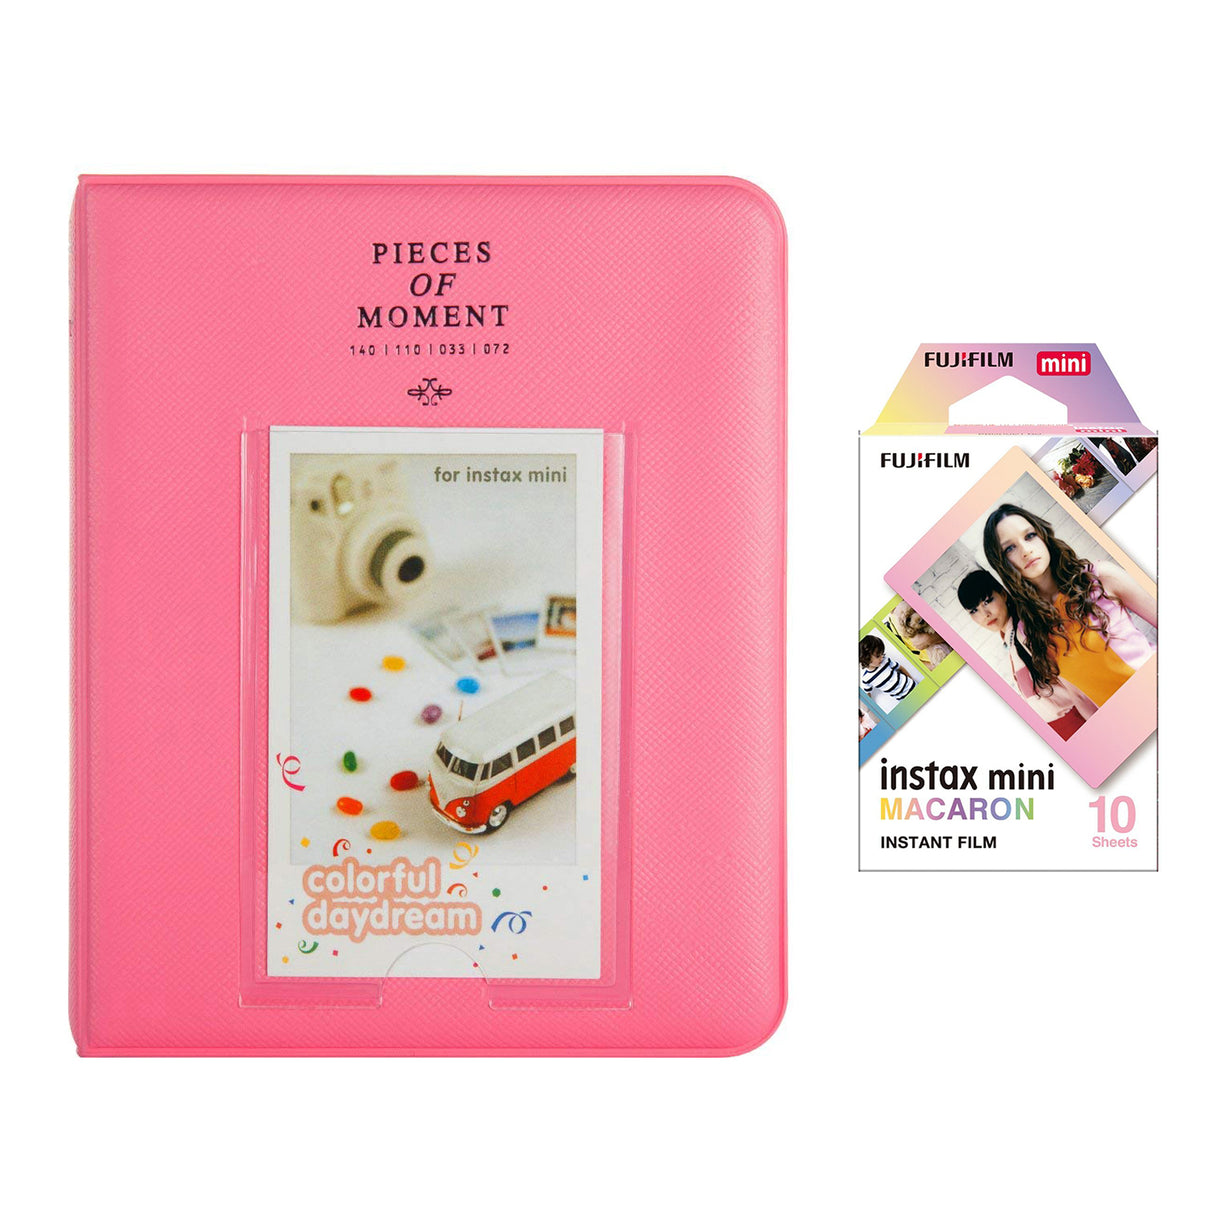 Fujifilm Instax Mini 10X1 macaron Instant Film with Instax Time Photo Album 64 Sheets FLAMINGO PINK